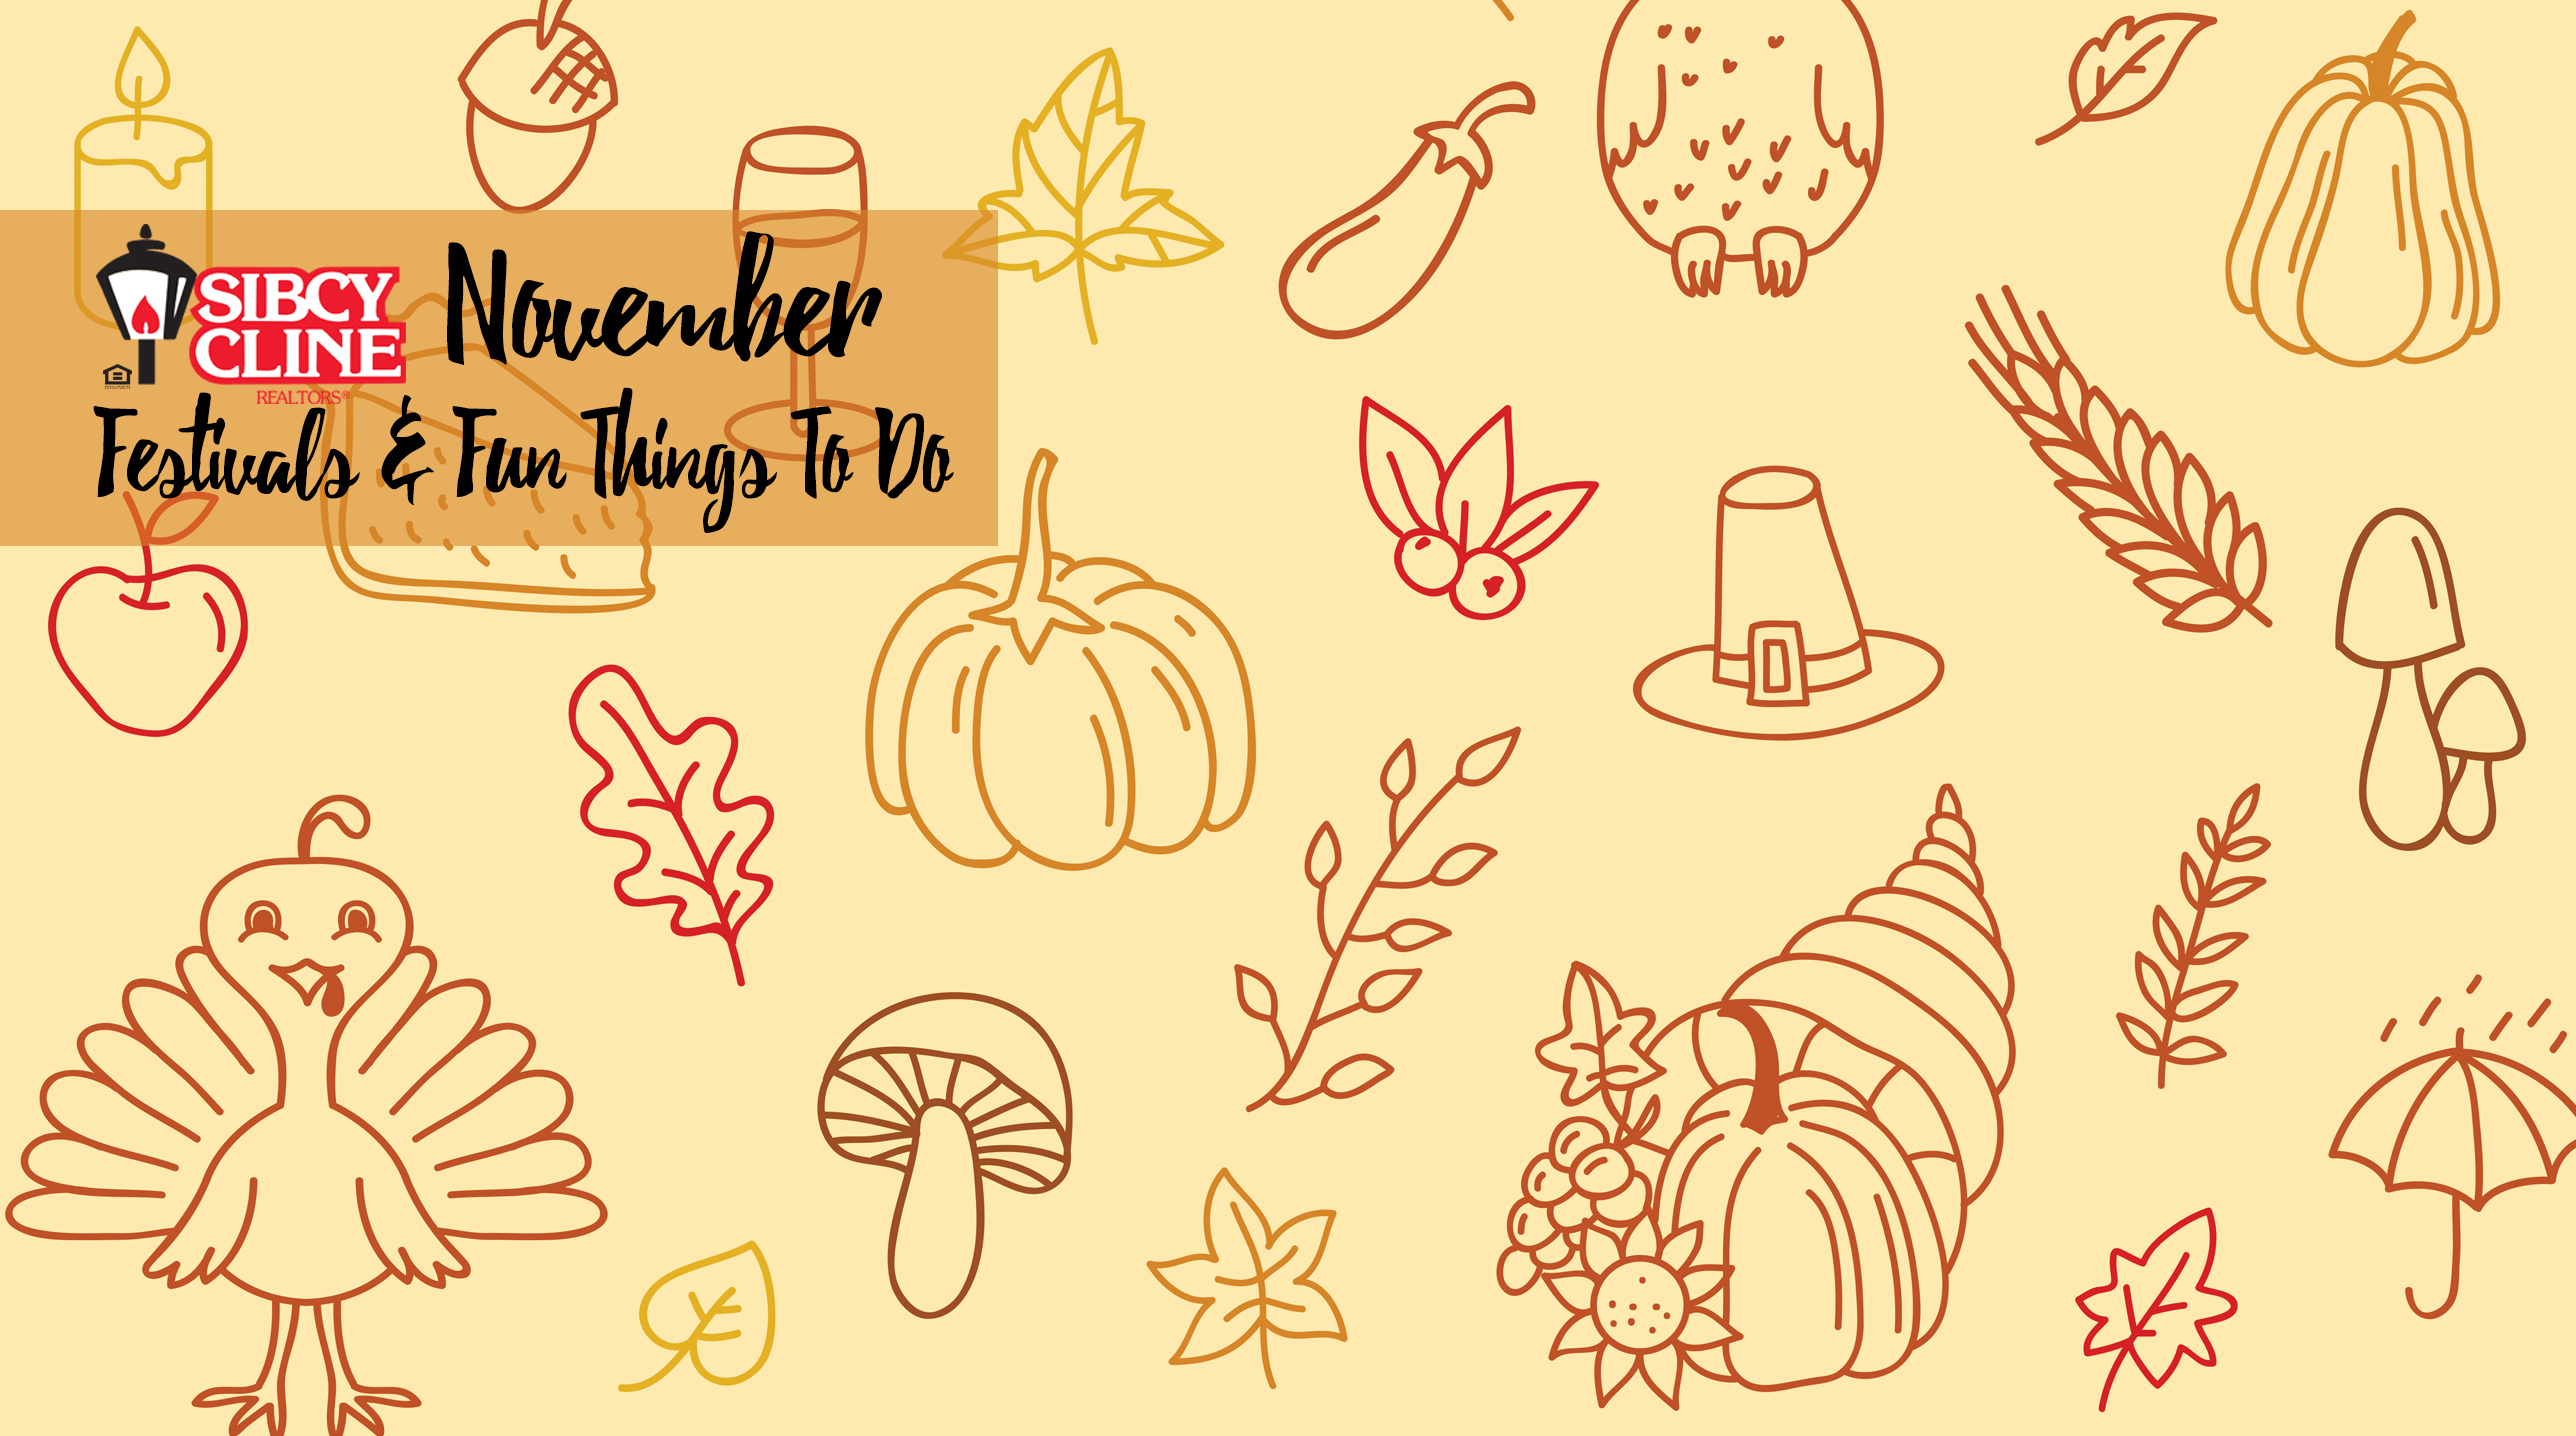 November things to do